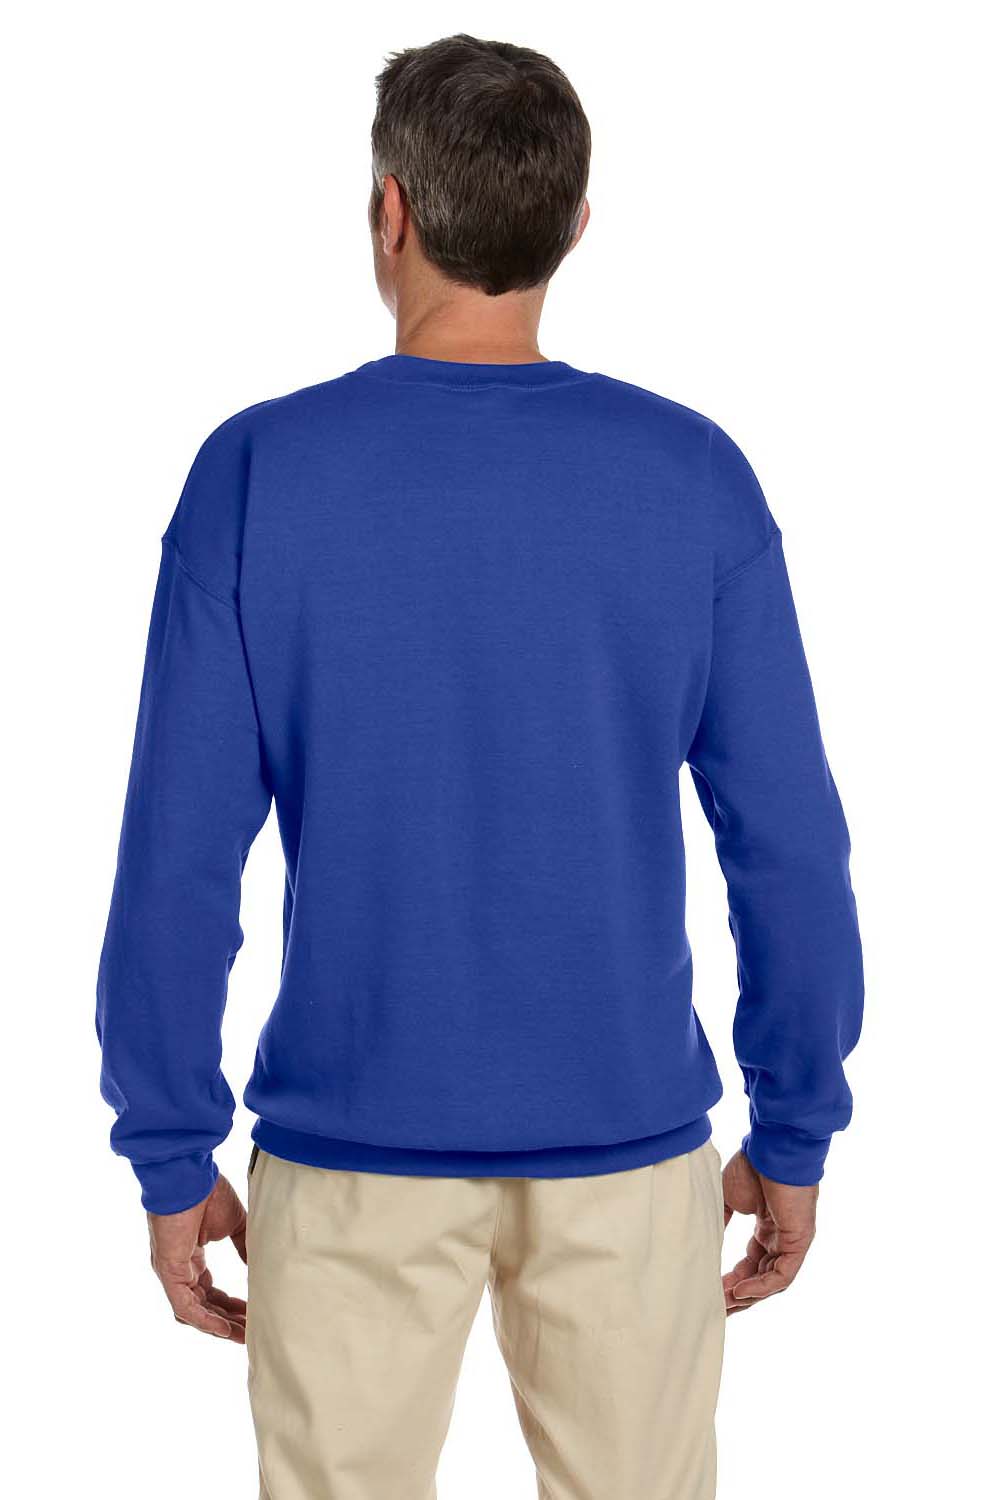 Hanes F260 Mens Ultimate Cotton PrintPro XP Crewneck Sweatshirt Royal Blue Back